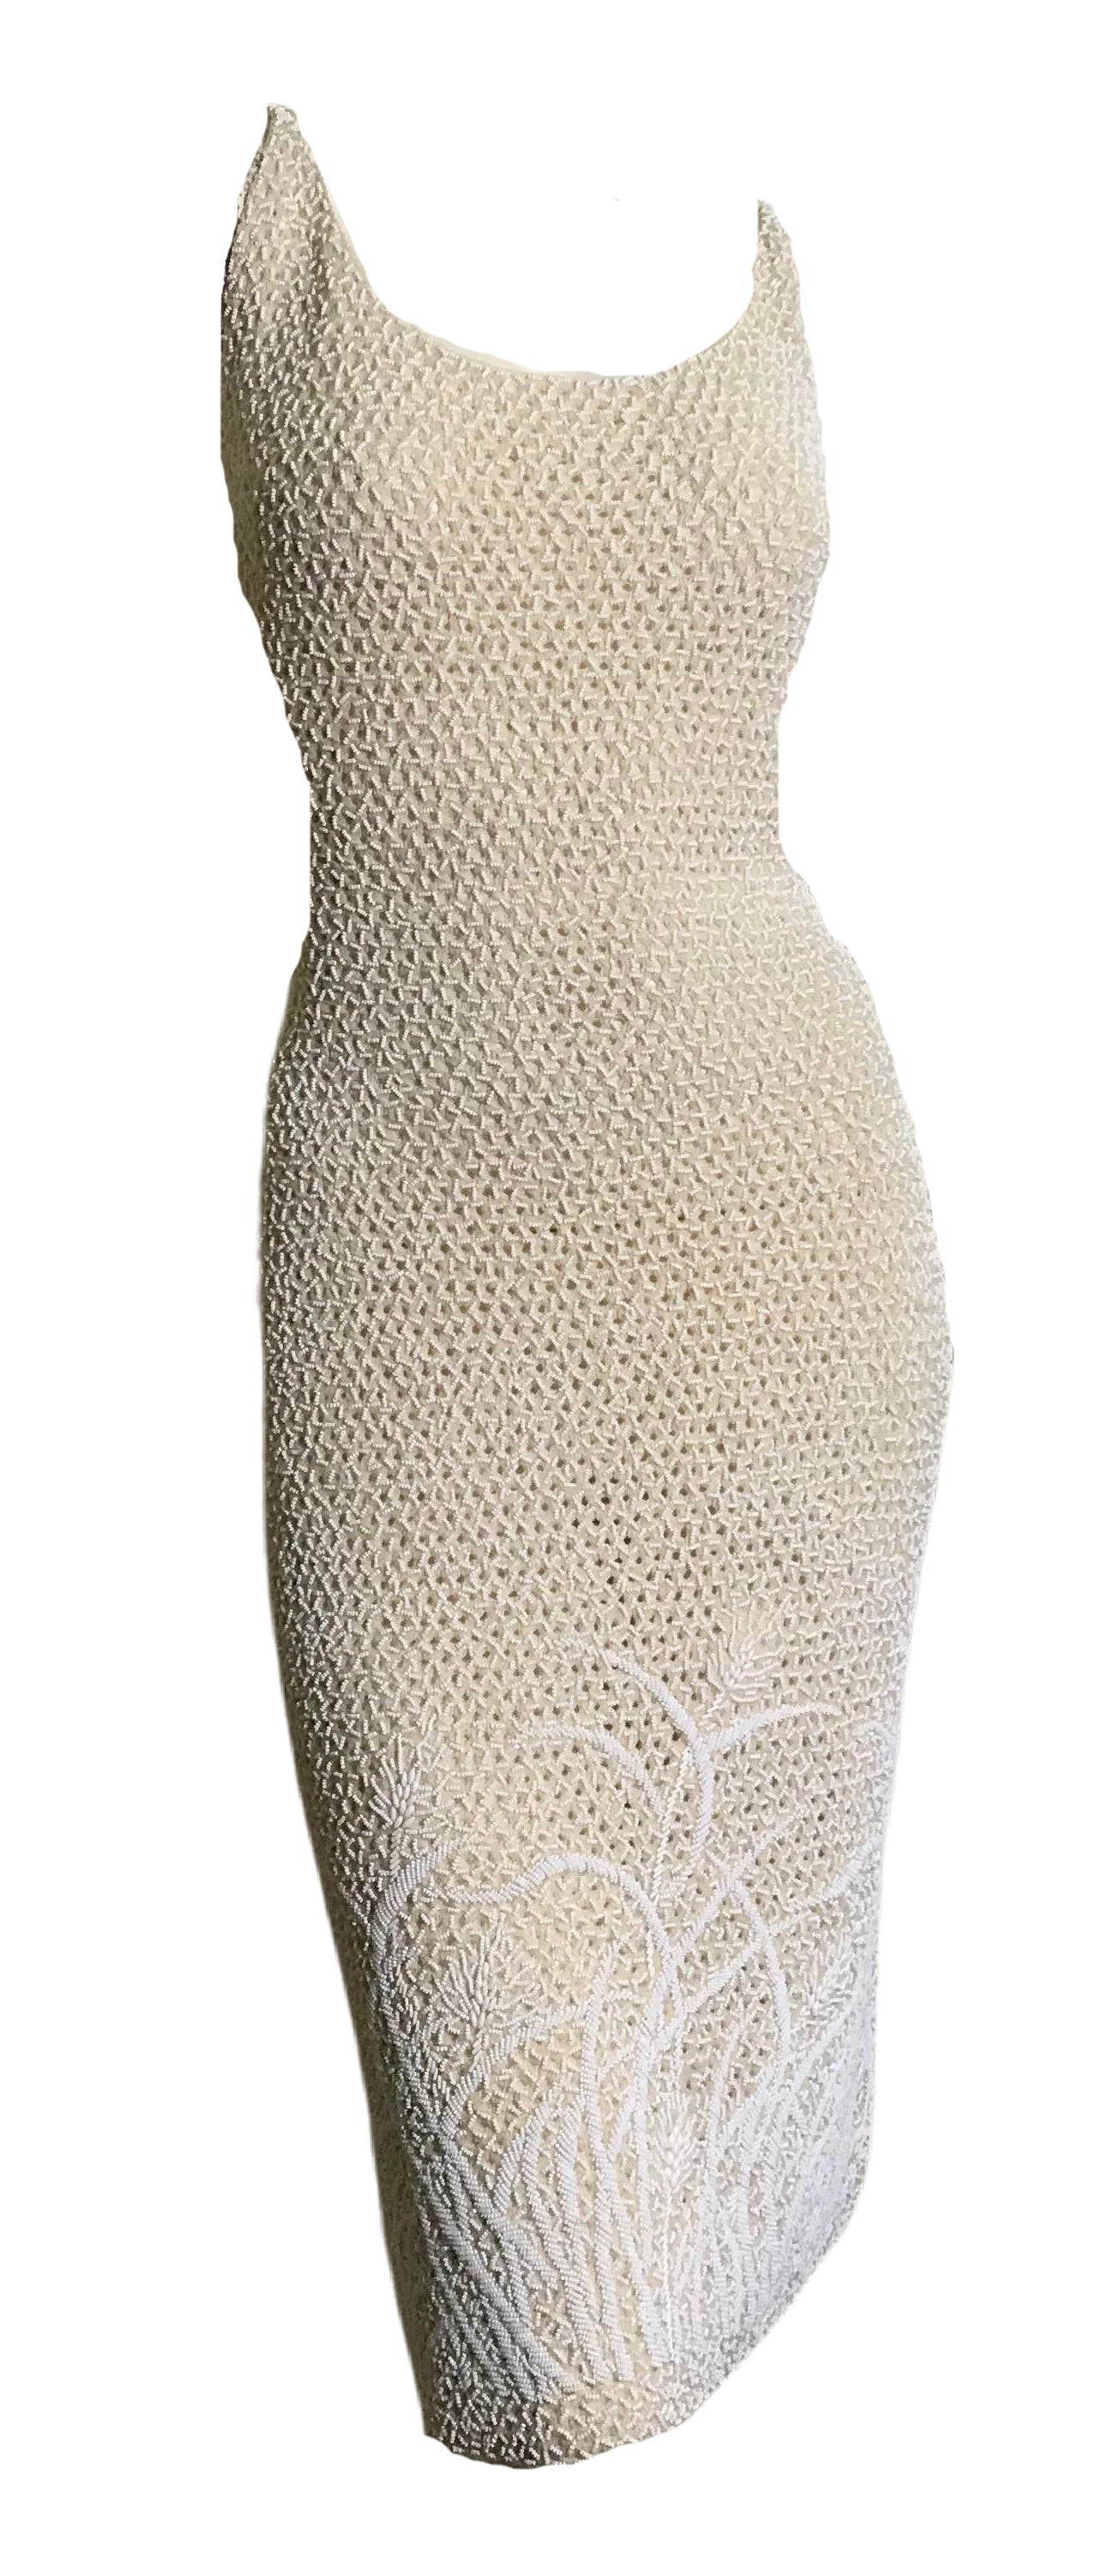 Heron White Art Nouveau Design Glass Beaded Wool Cocktail Dress circa 1960s